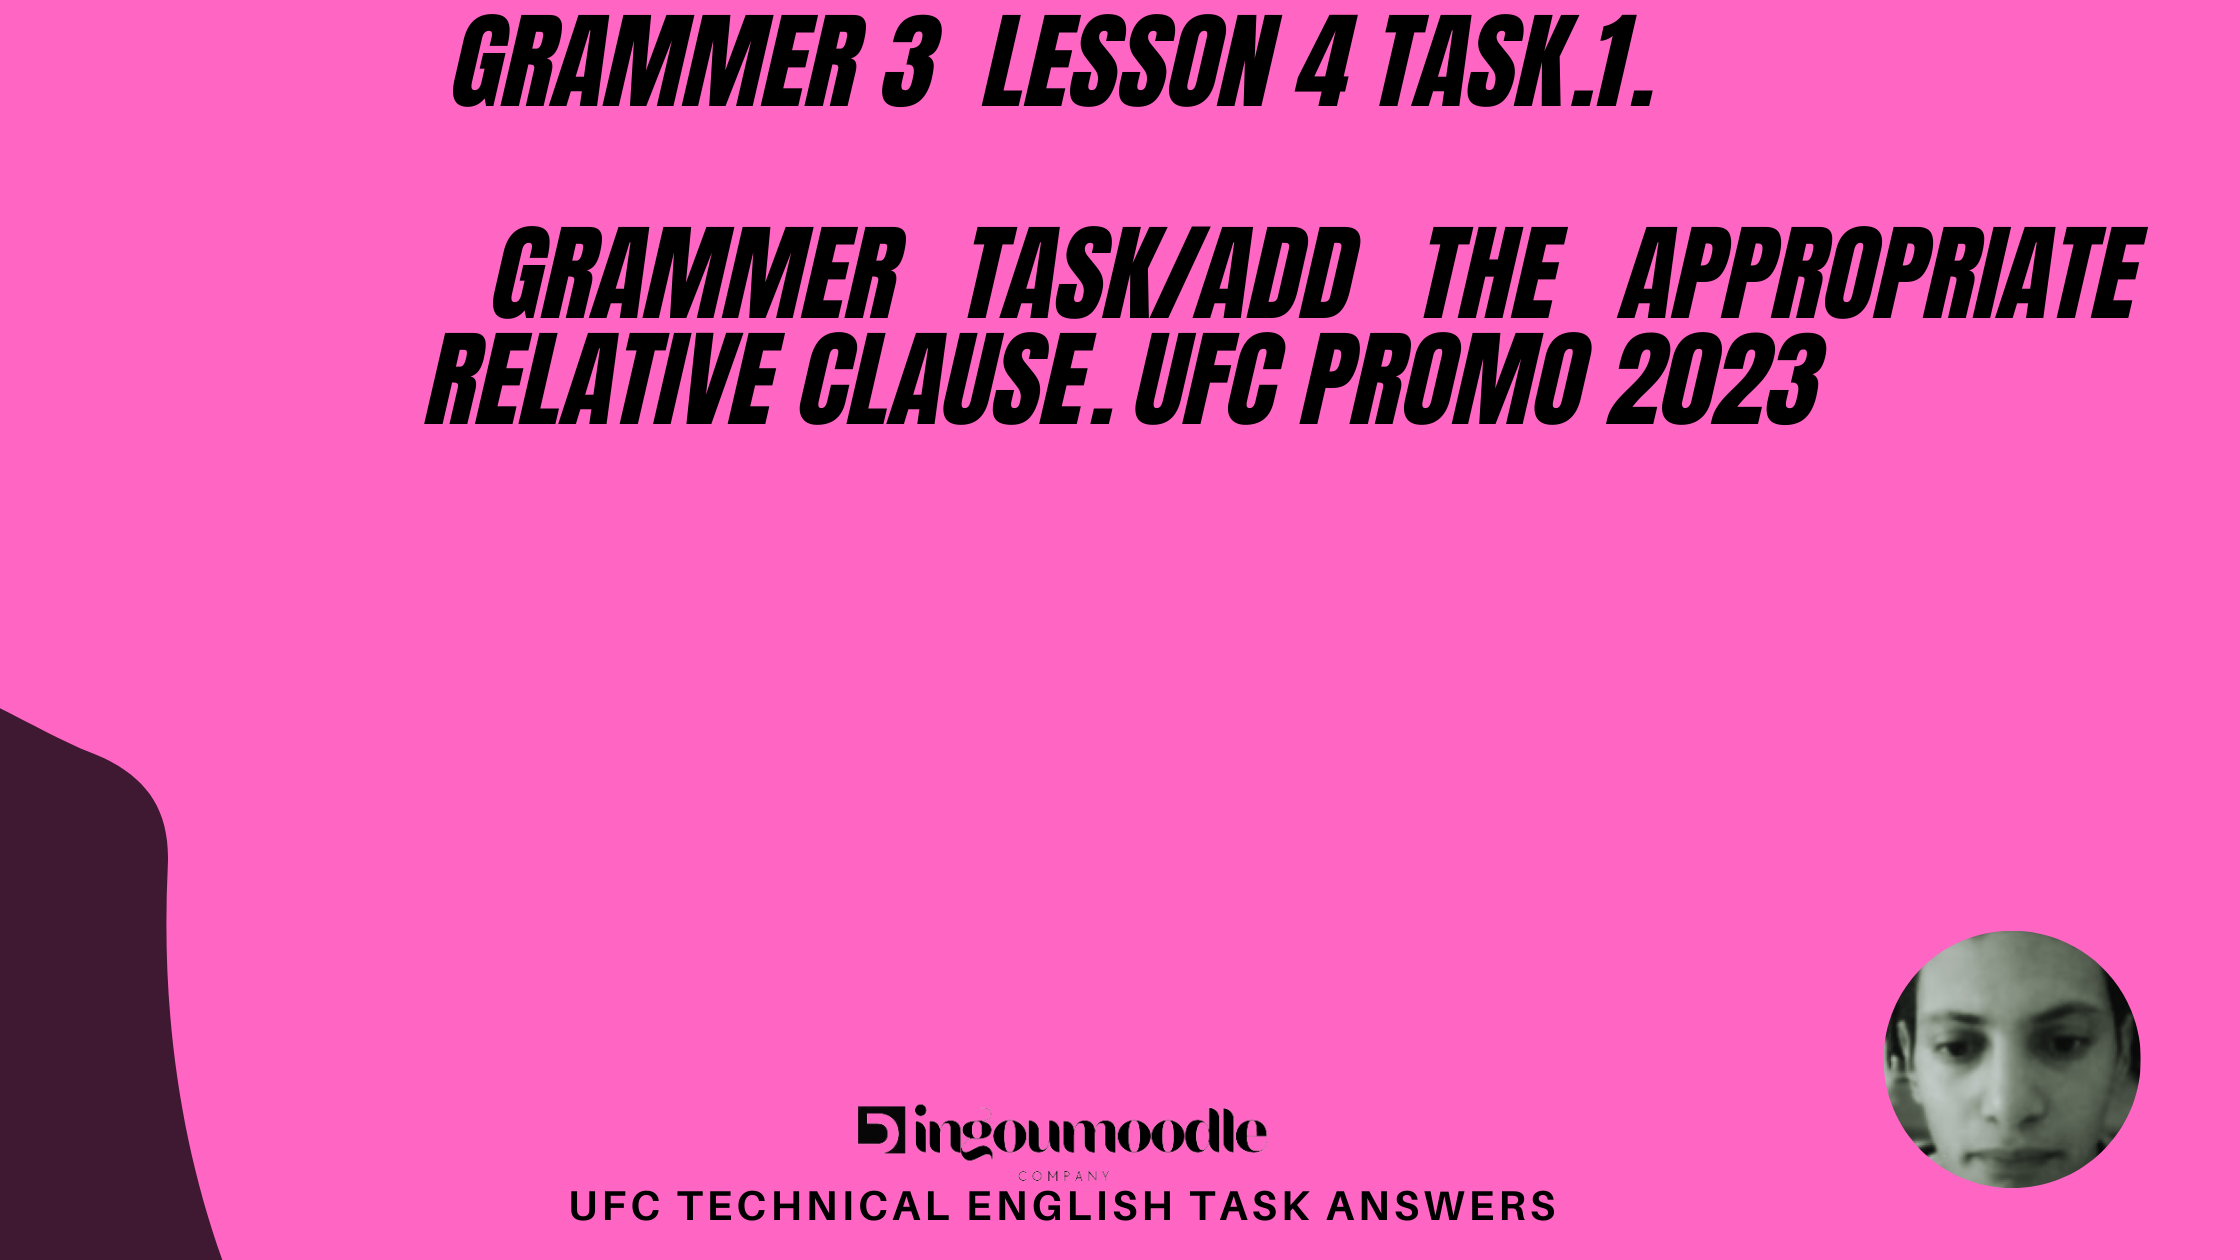 Grammar Task/Add the appropriate relative clause. ufc promo 2023